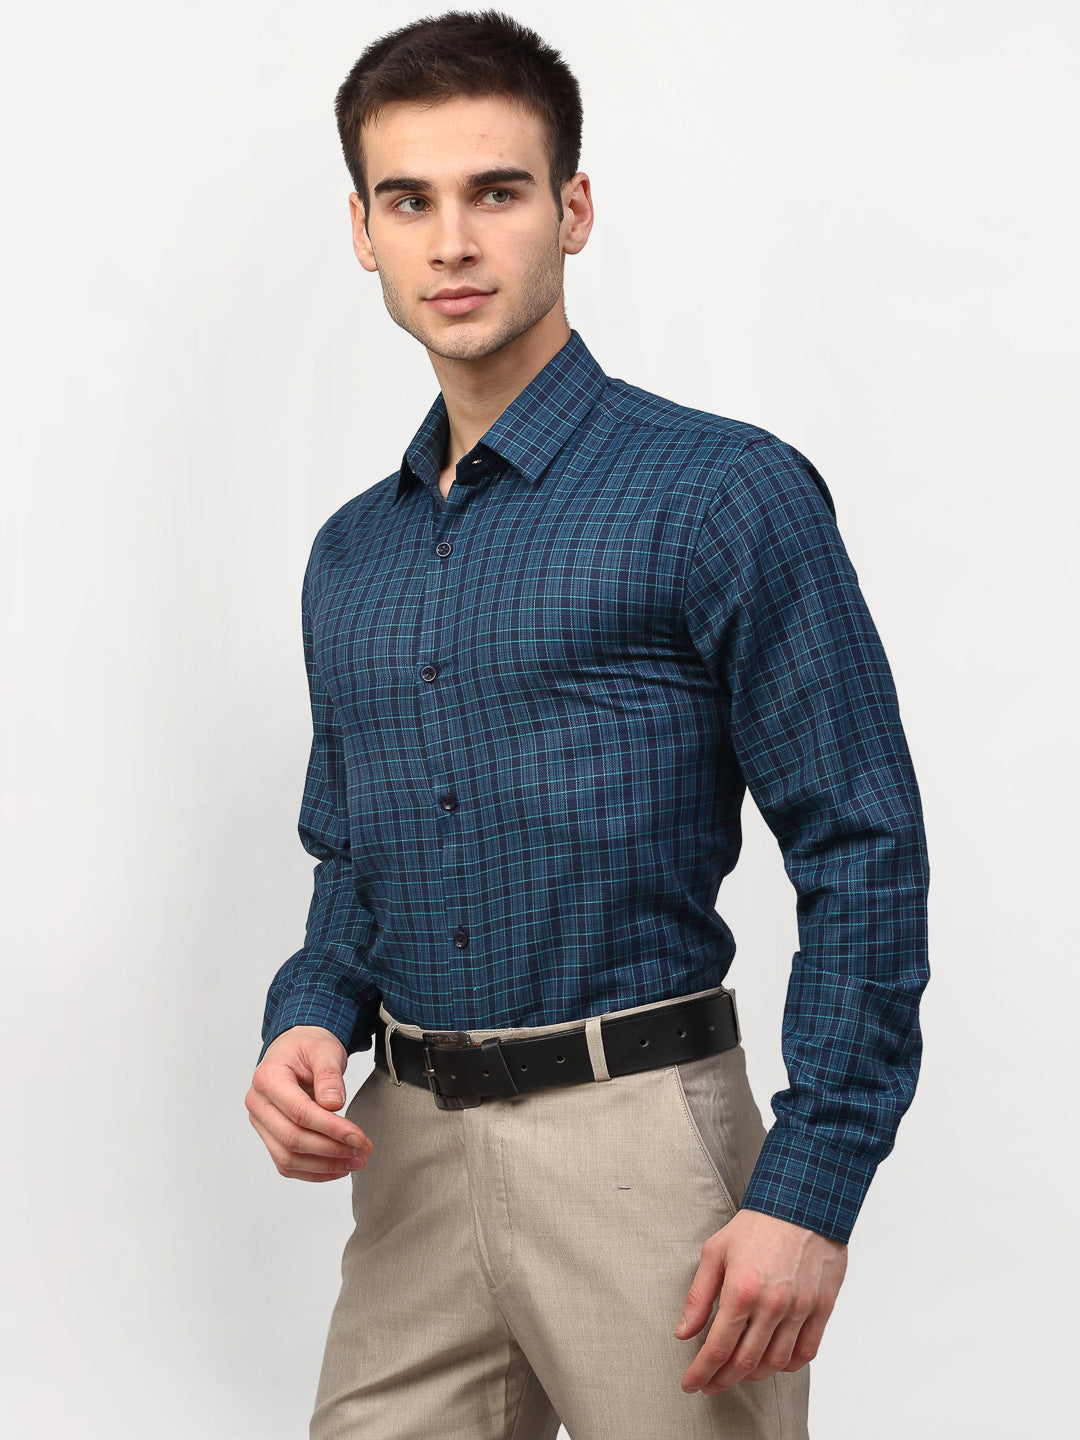 Men's Blue Checked Formal Shirts ( SF 780Blue ) - Jainish